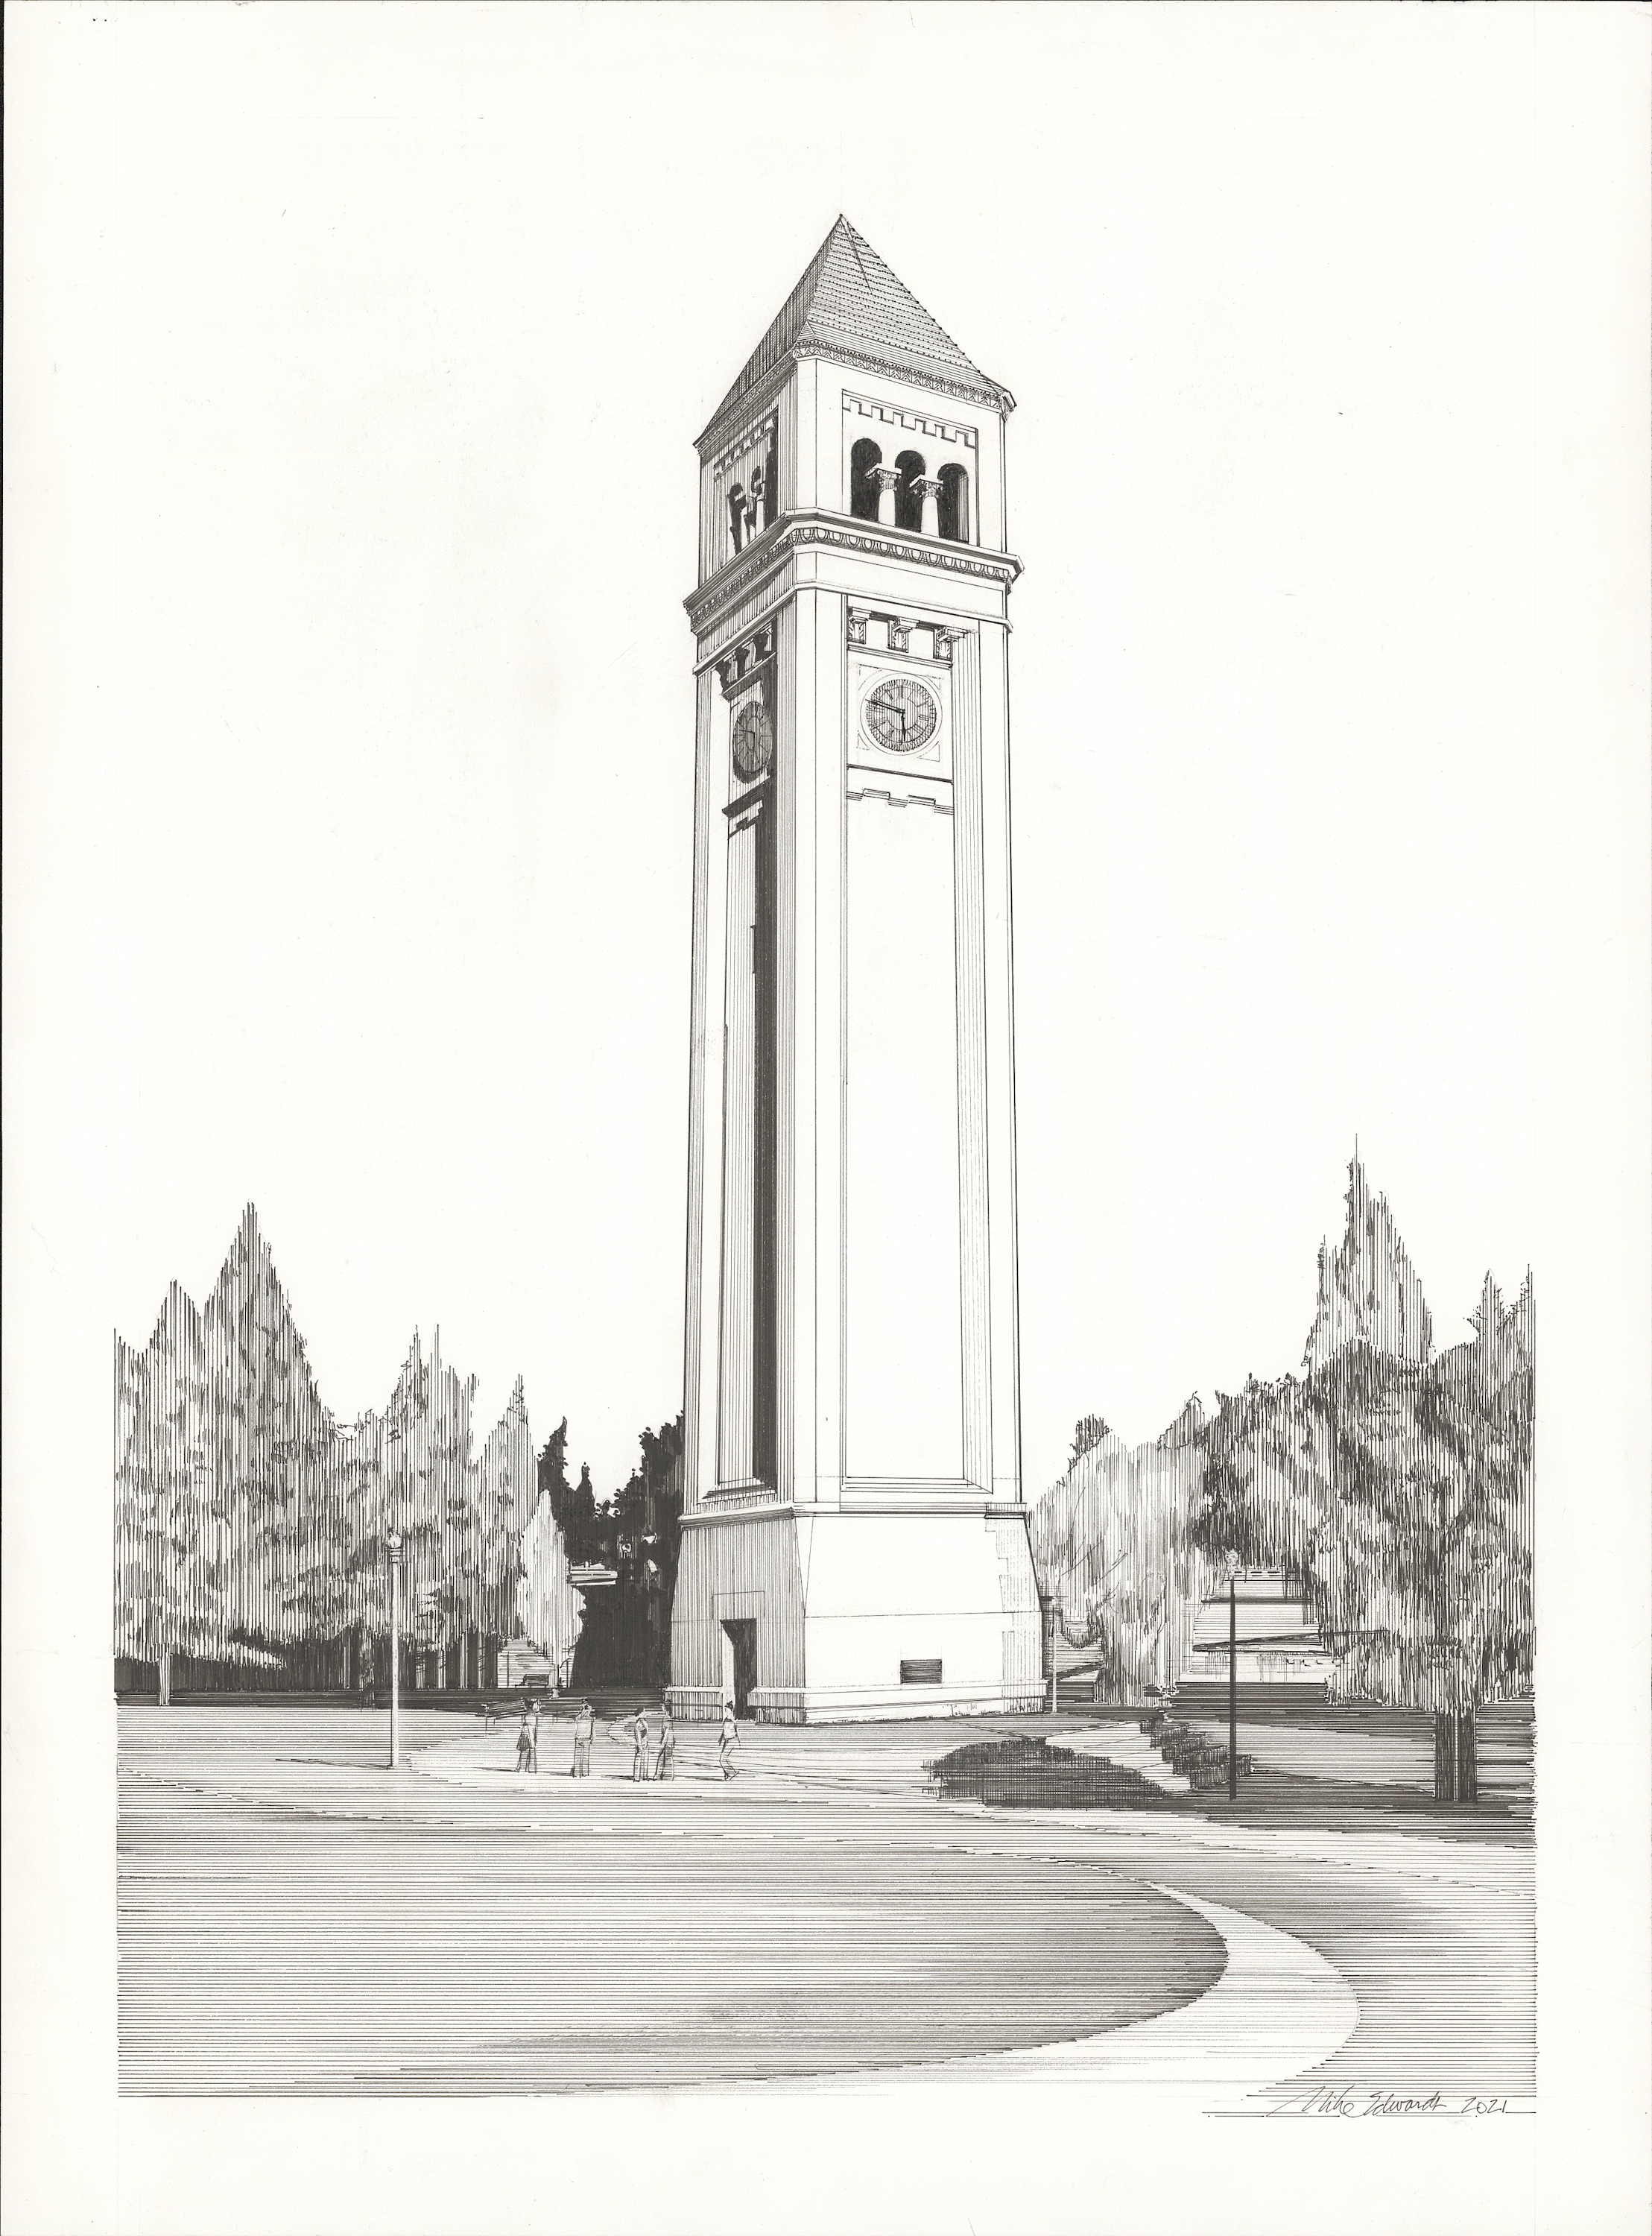 Low res scan of original clock tower uh7afv